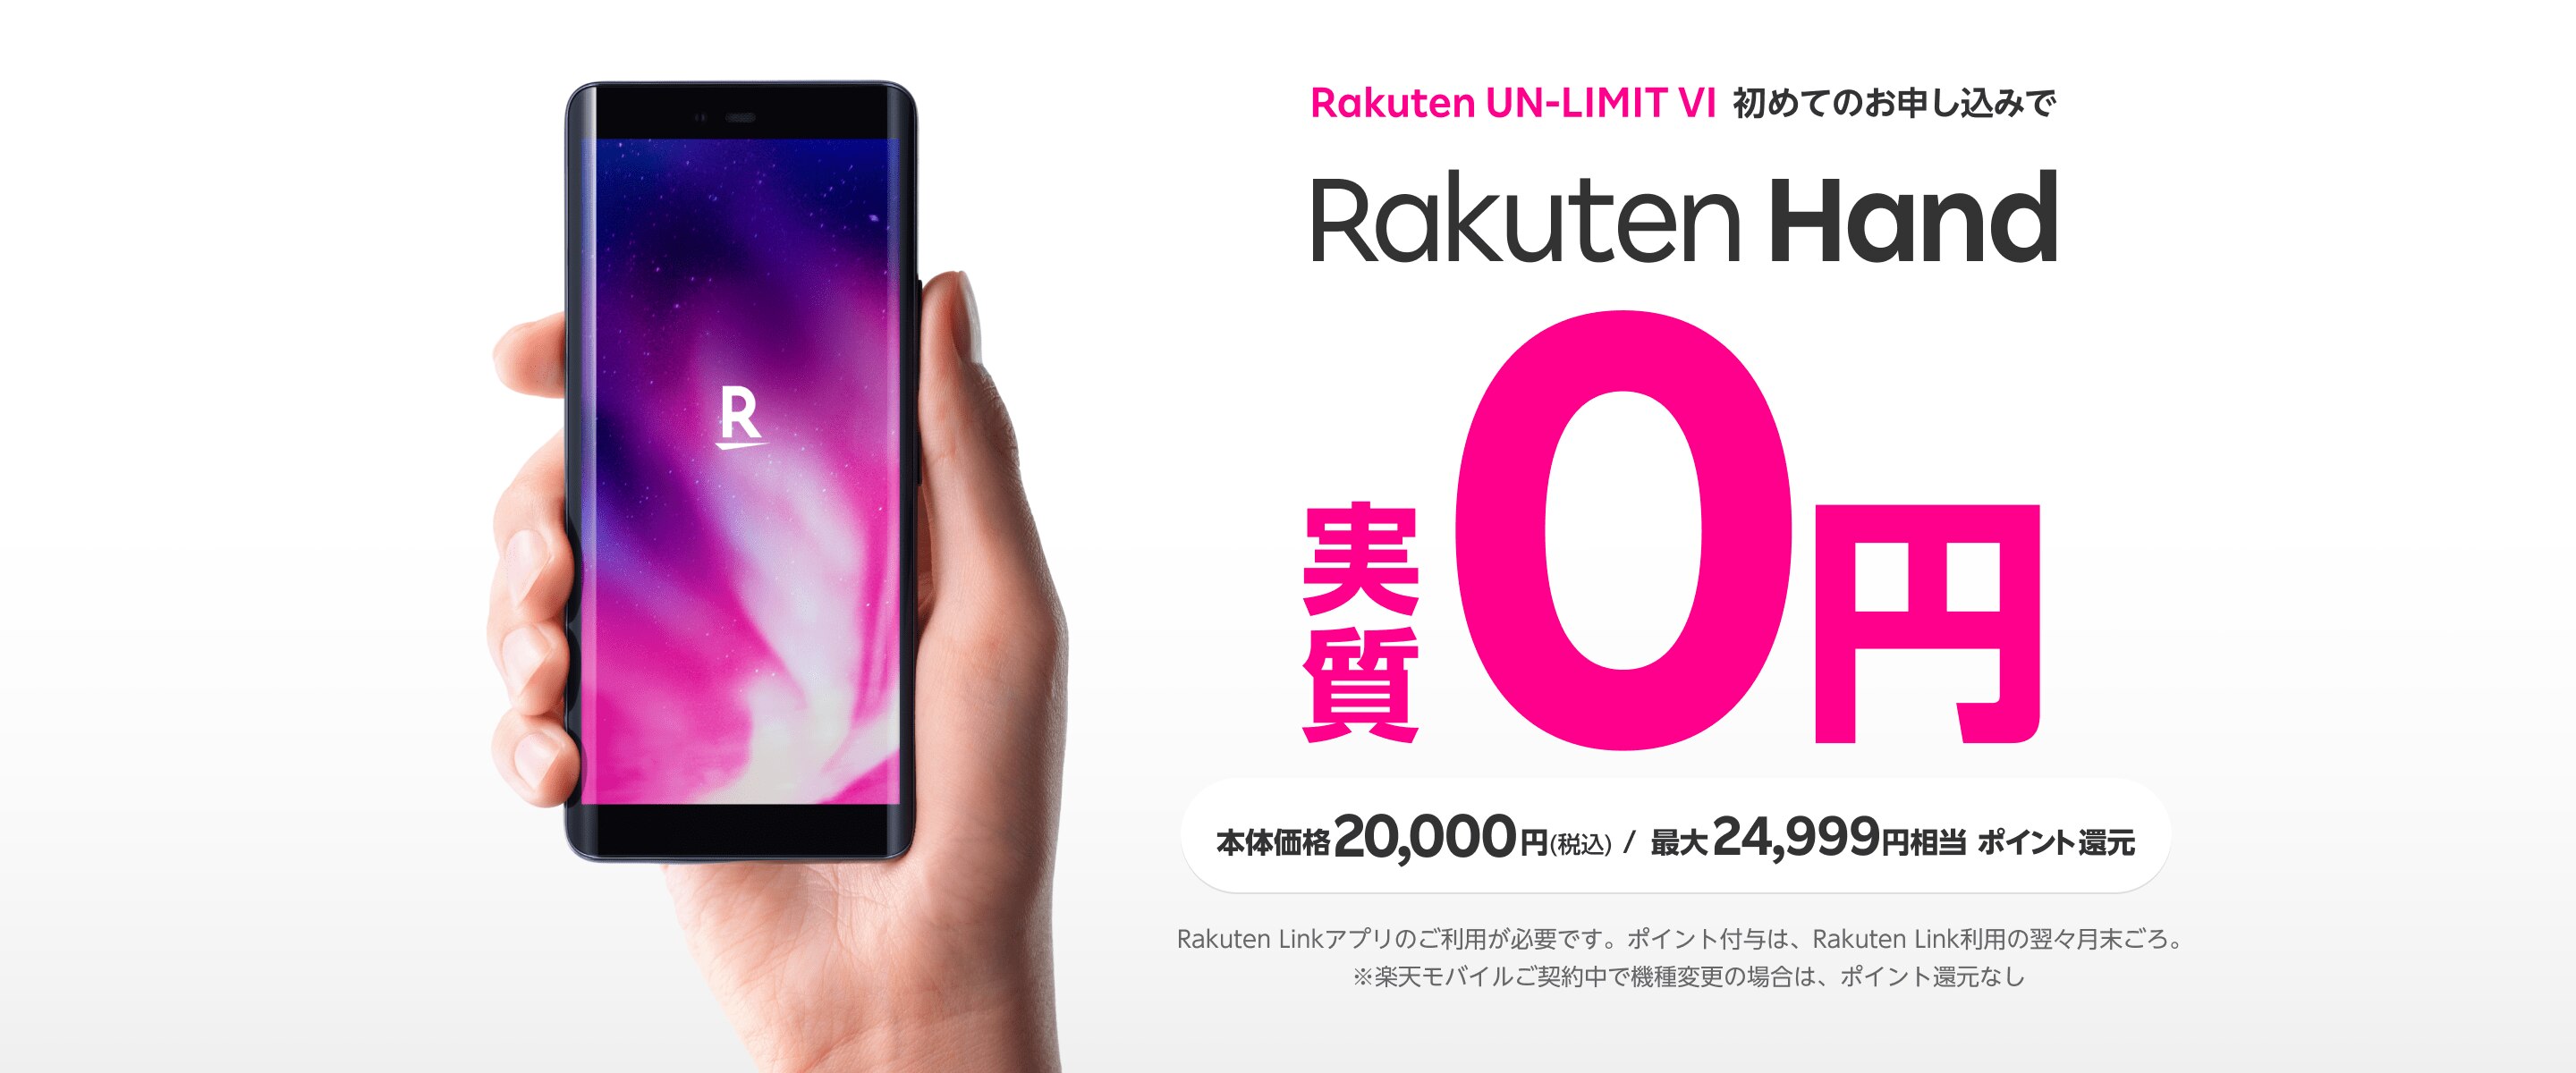 Rakuten UN-LIMIT V 初めてのお申し込みで Rakuten Hand 実質0円 本体価格20,000円(税込) / 最大24,999円相当 ポイント還元 ※Rakuten Linkアプリのご利用が必要です。ポイント付与は、Rakuten Link利用の翌々月末ごろ。 ※楽天モバイルご契約中で機種変更の場合は、ポイント還元なし